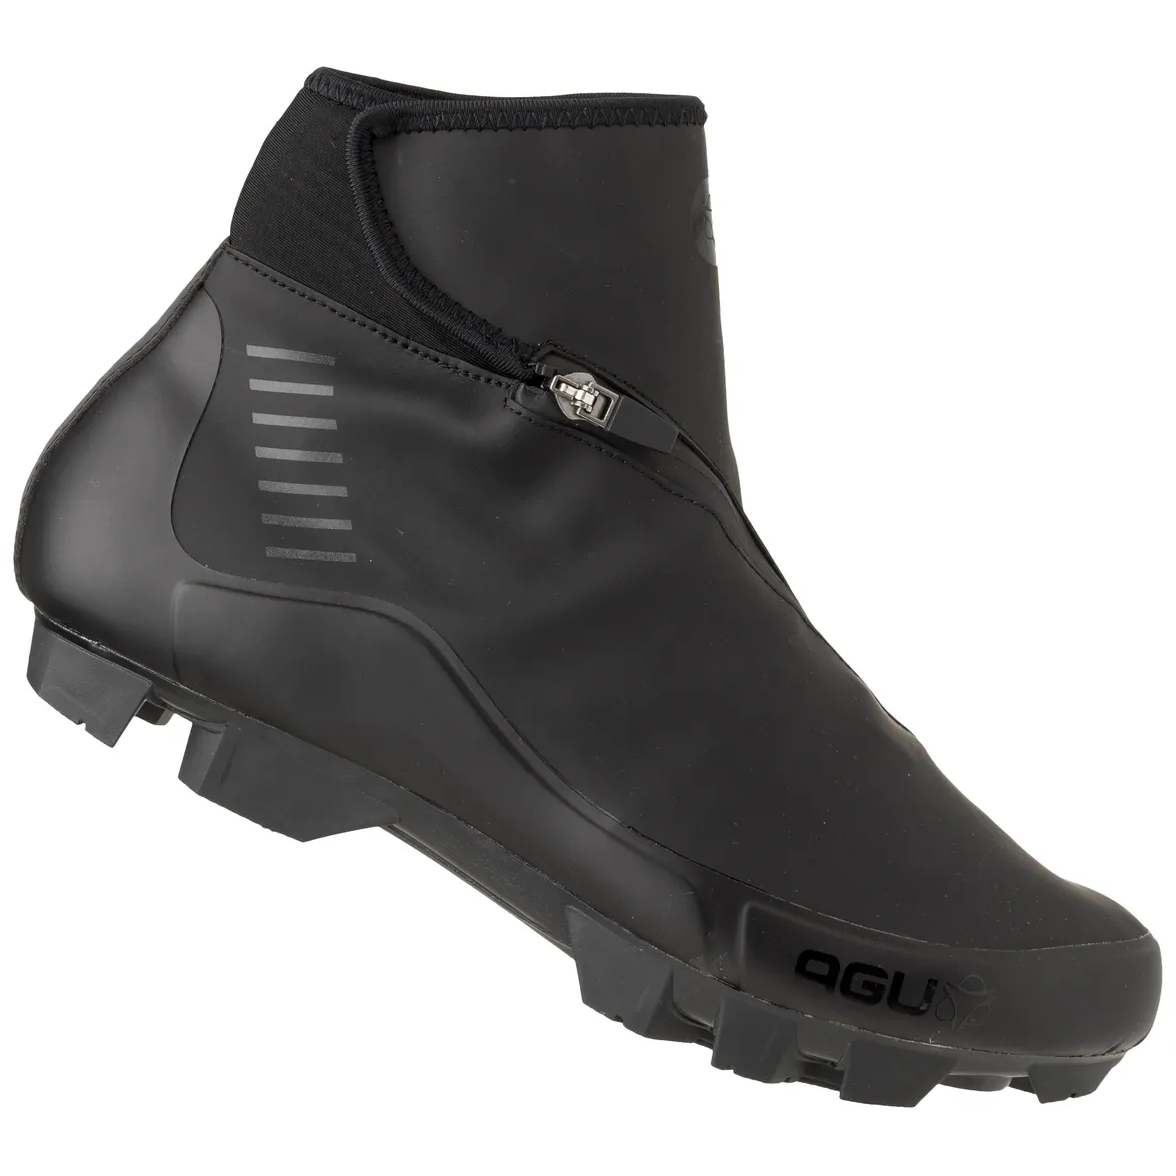 Productfoto van AGU Essential M710 Waterdichte Schoenen - zwart